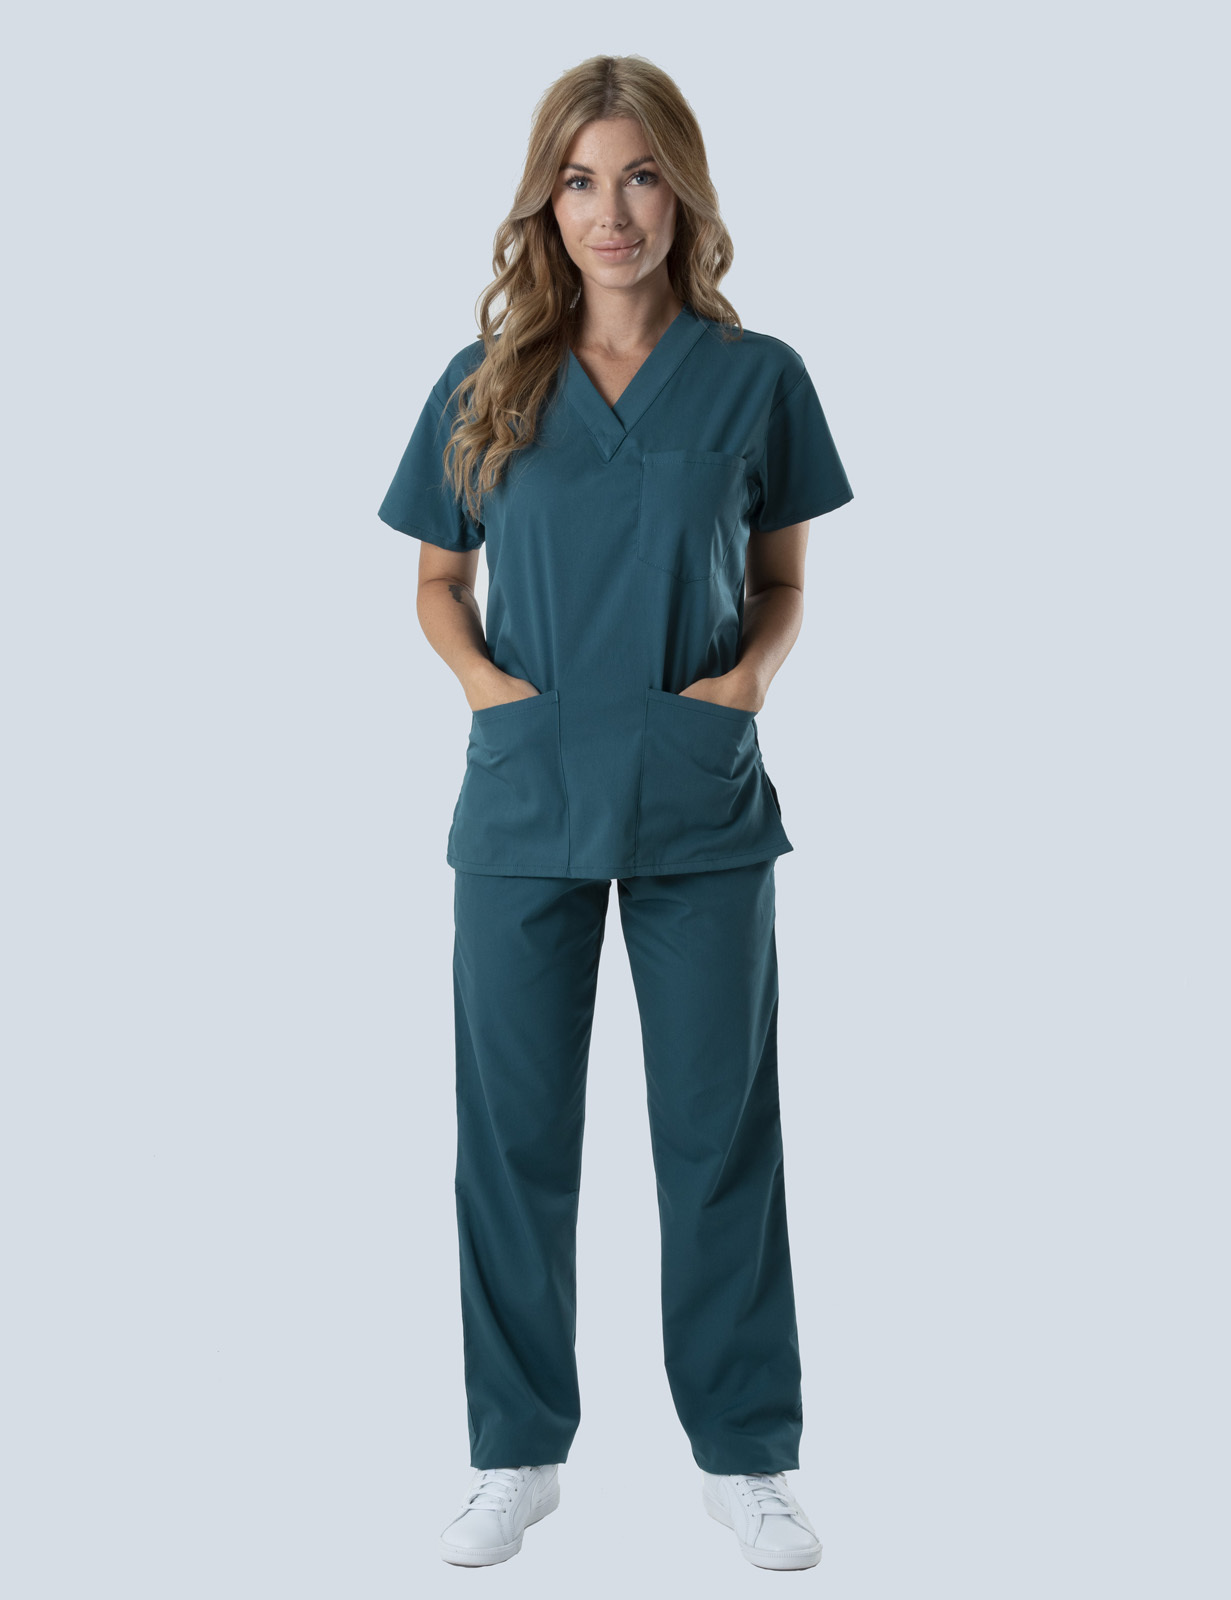 Royal Hobart Hospital - Emergency Doctor (4 Pocket Scrub Top and Cargo Pants in Caribbean incl Logos)